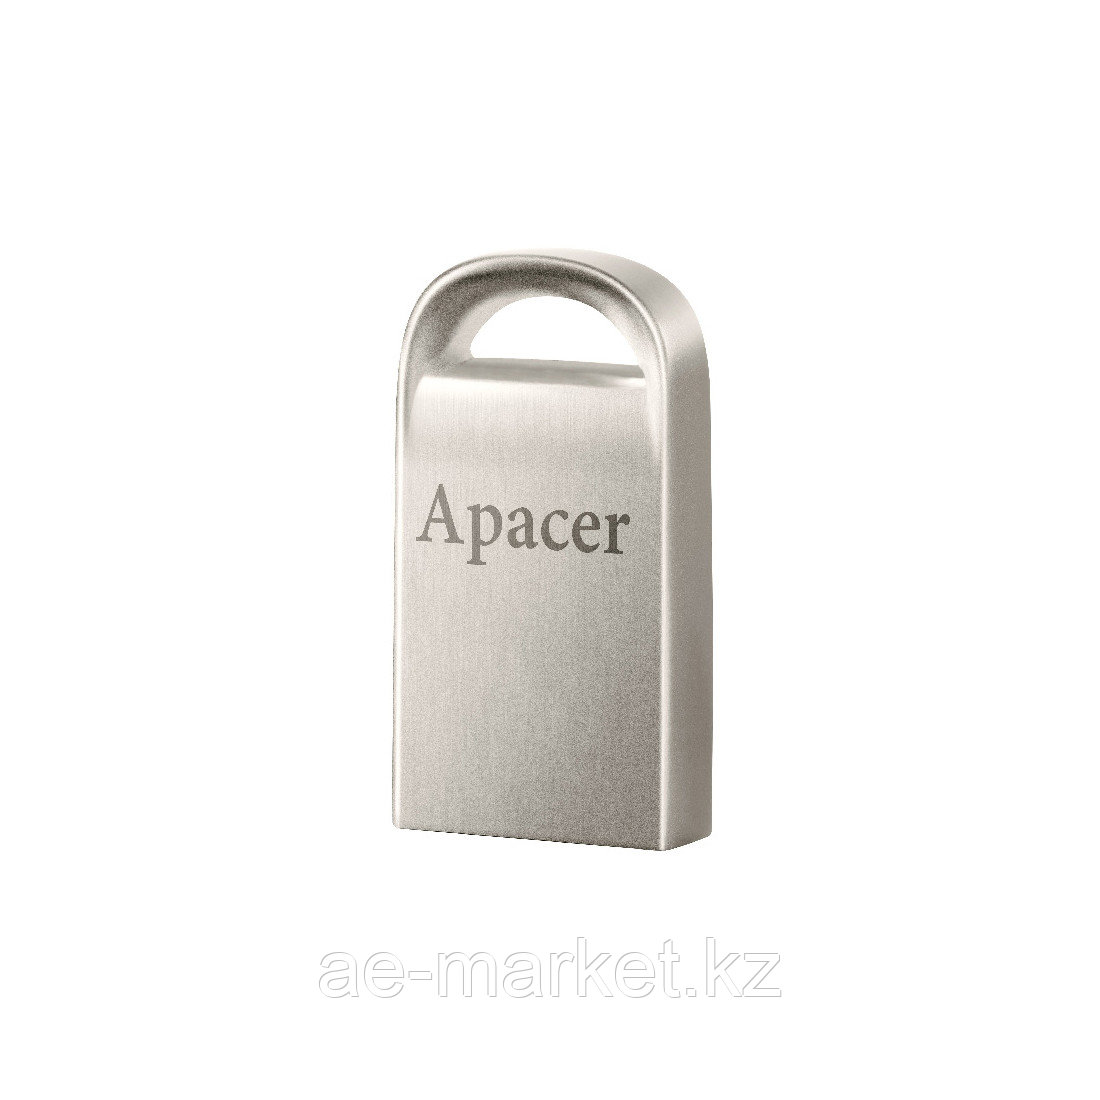 USB-накопитель Apacer AH115 16GB Серый